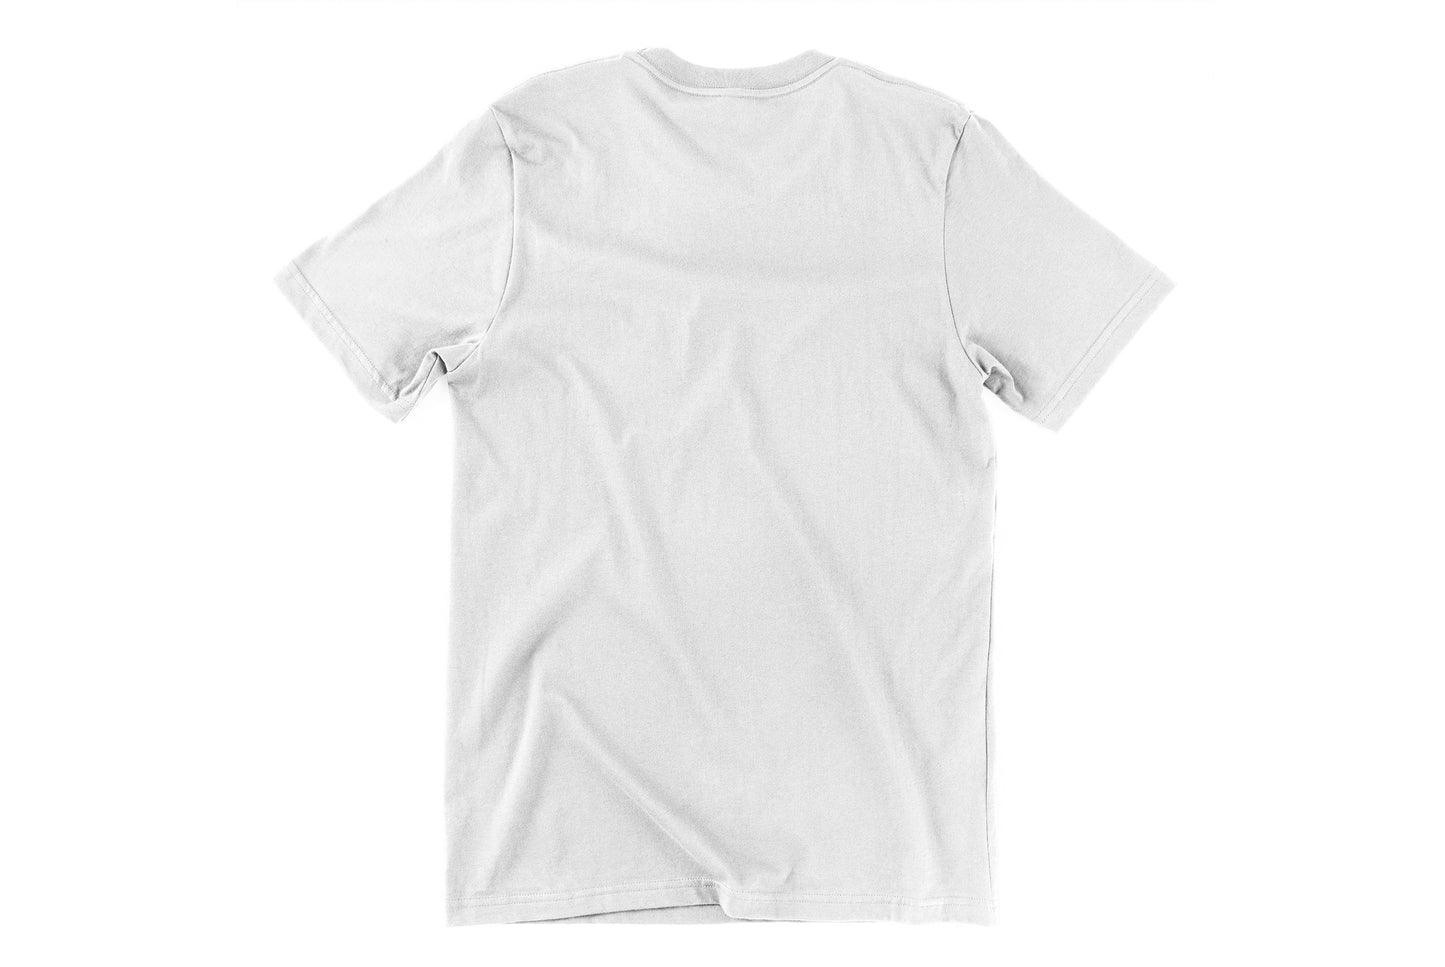 Arteries Heat Transfer on White T-Shirt